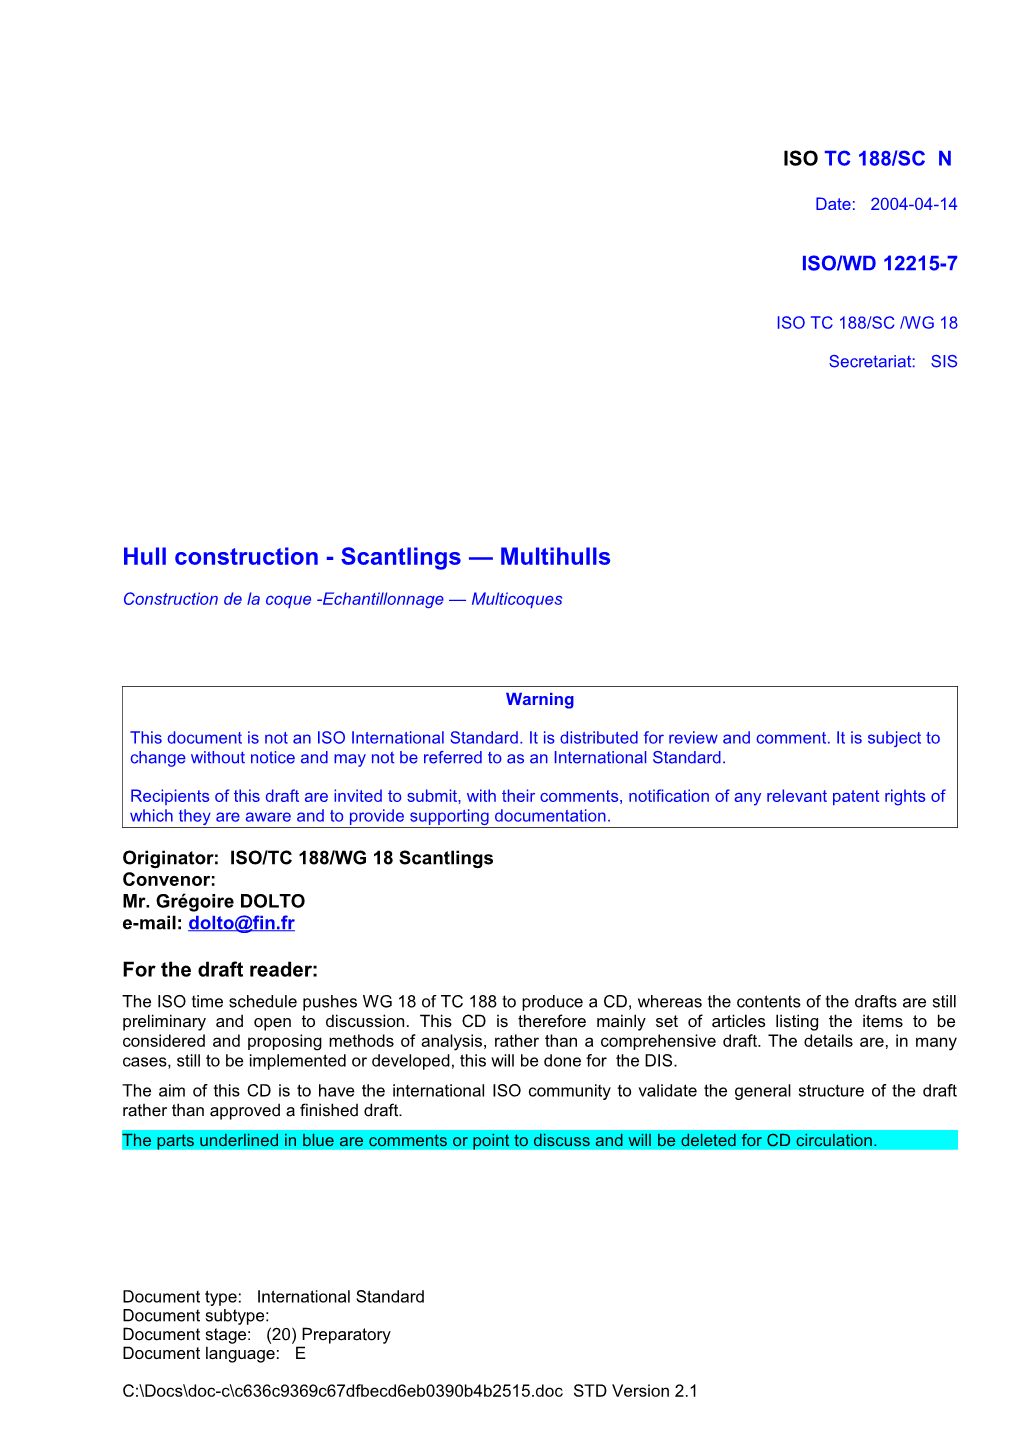 Hull Construction - Scantlings Multihulls